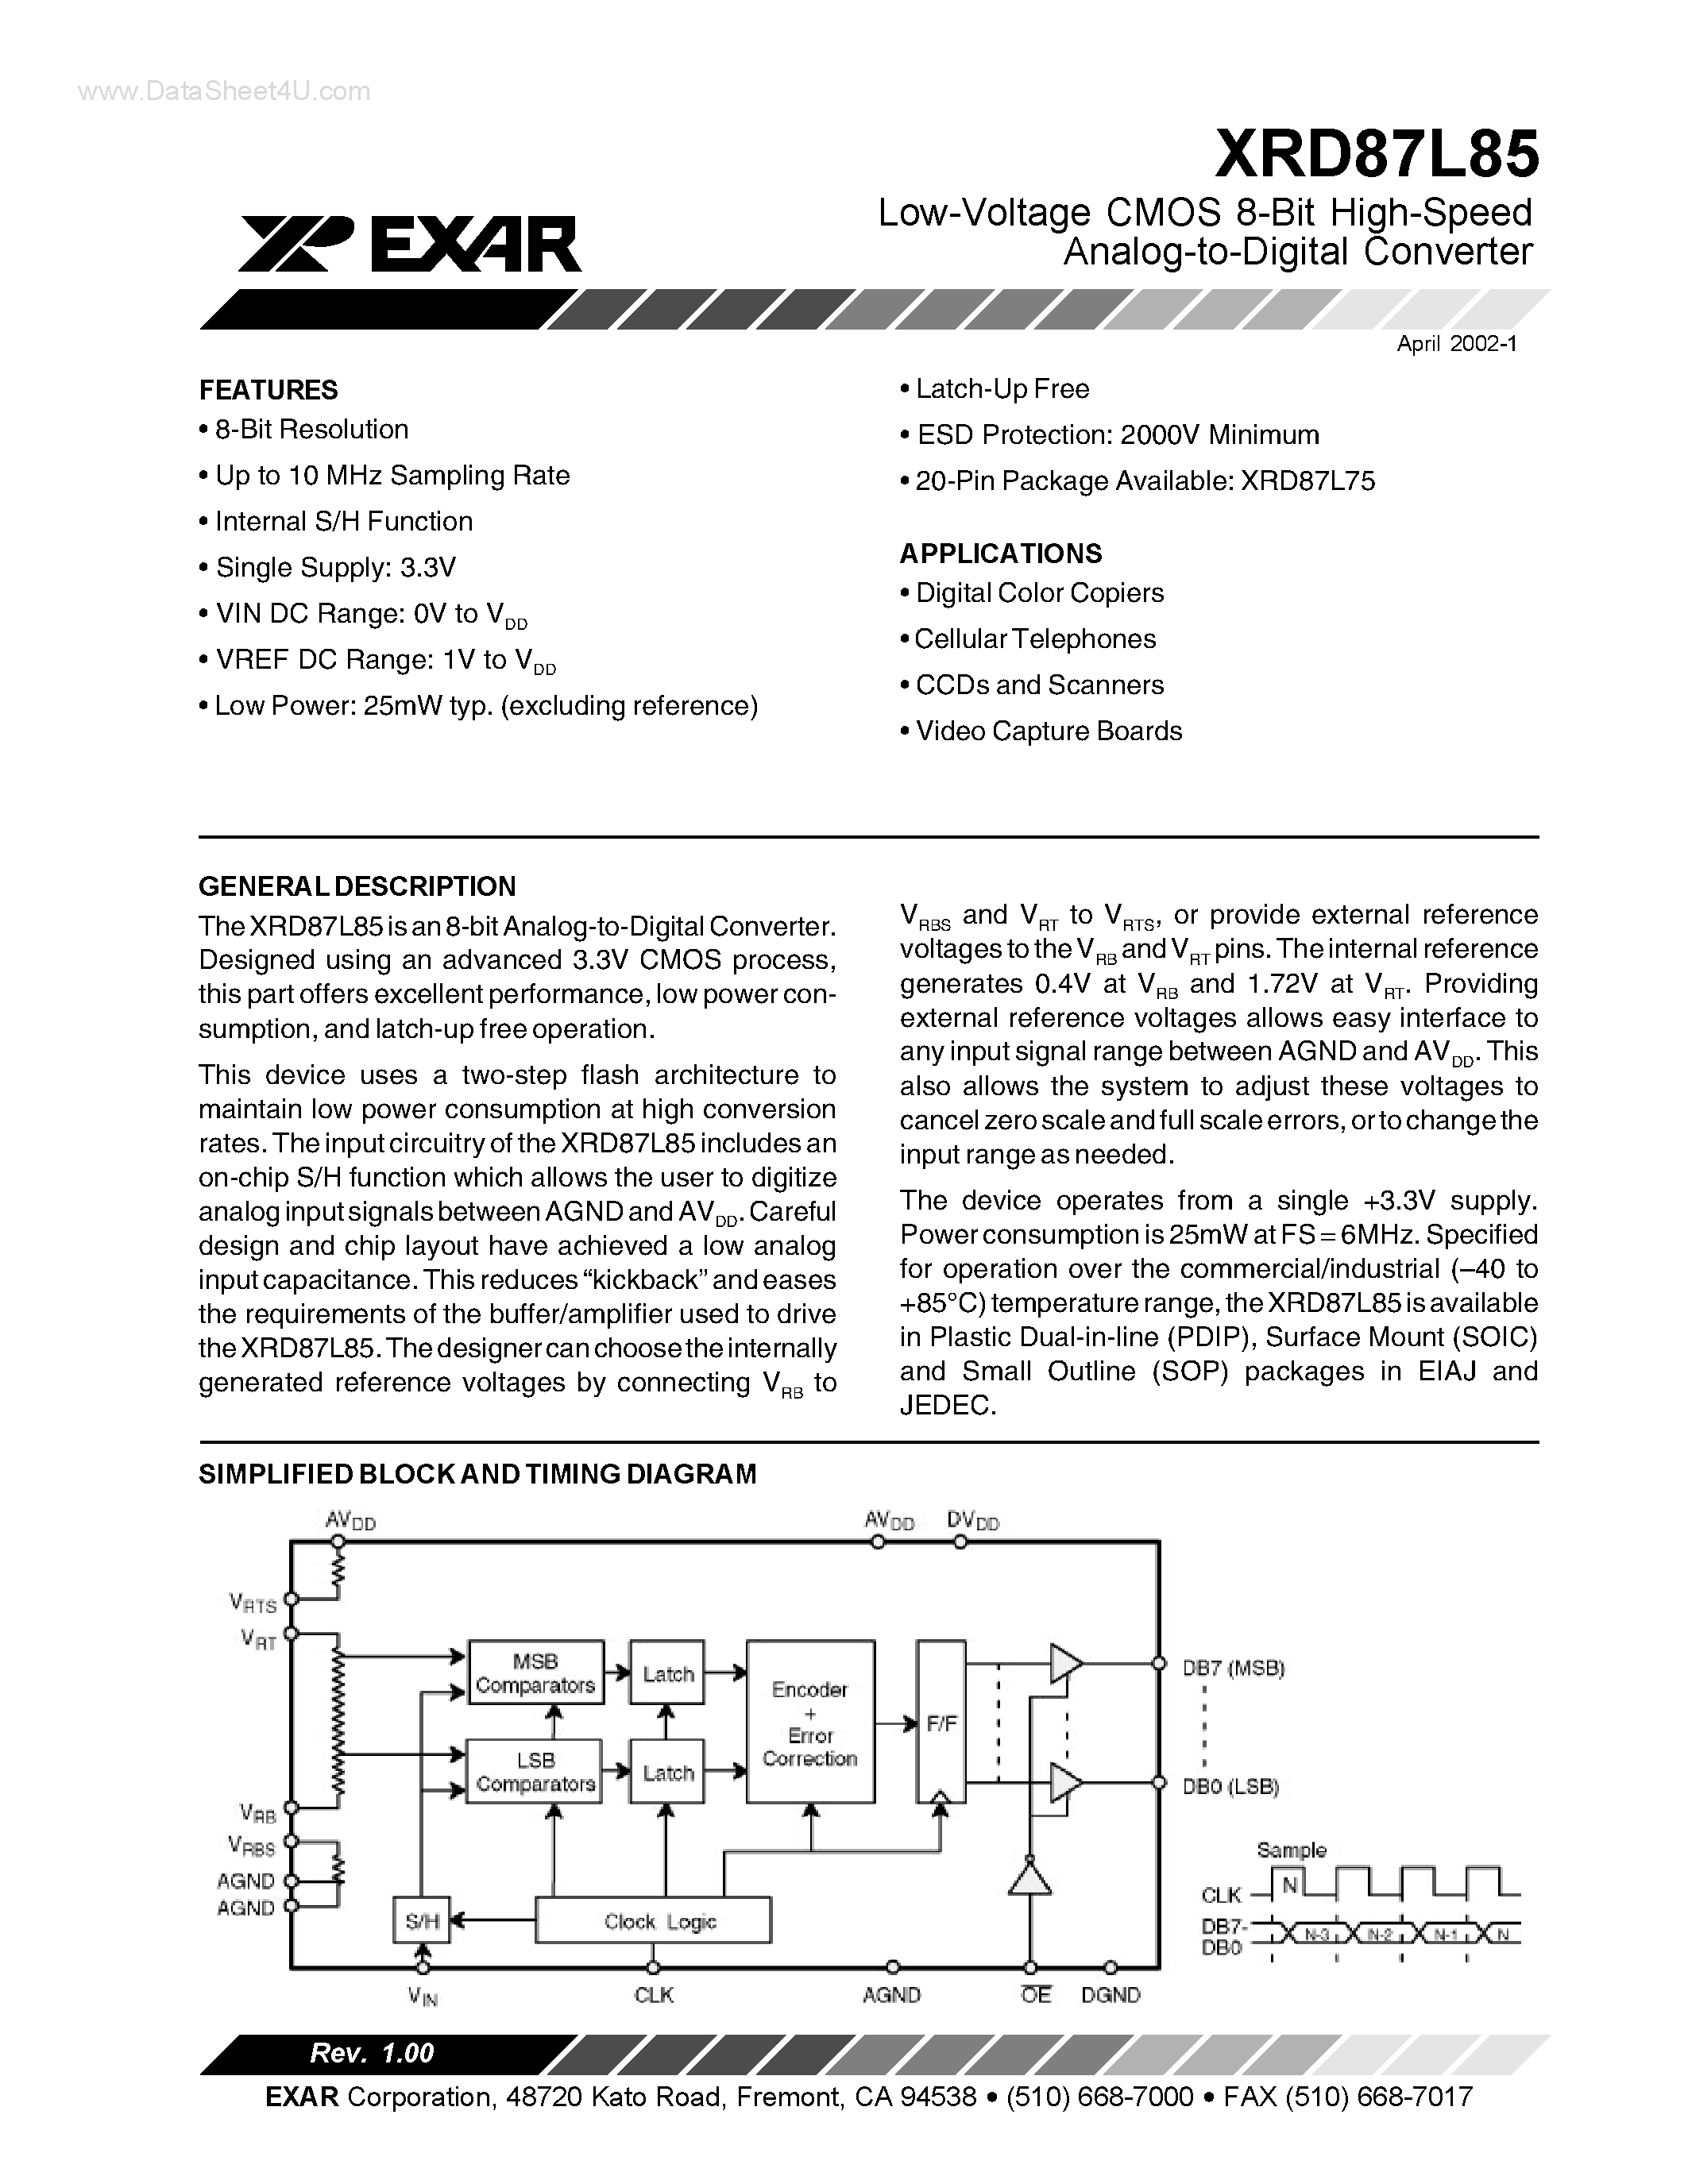 Даташит XRD87L85 - Low-Voltage CMOS 8-Bit High-Speed Analog-to-Digital Converter страница 1